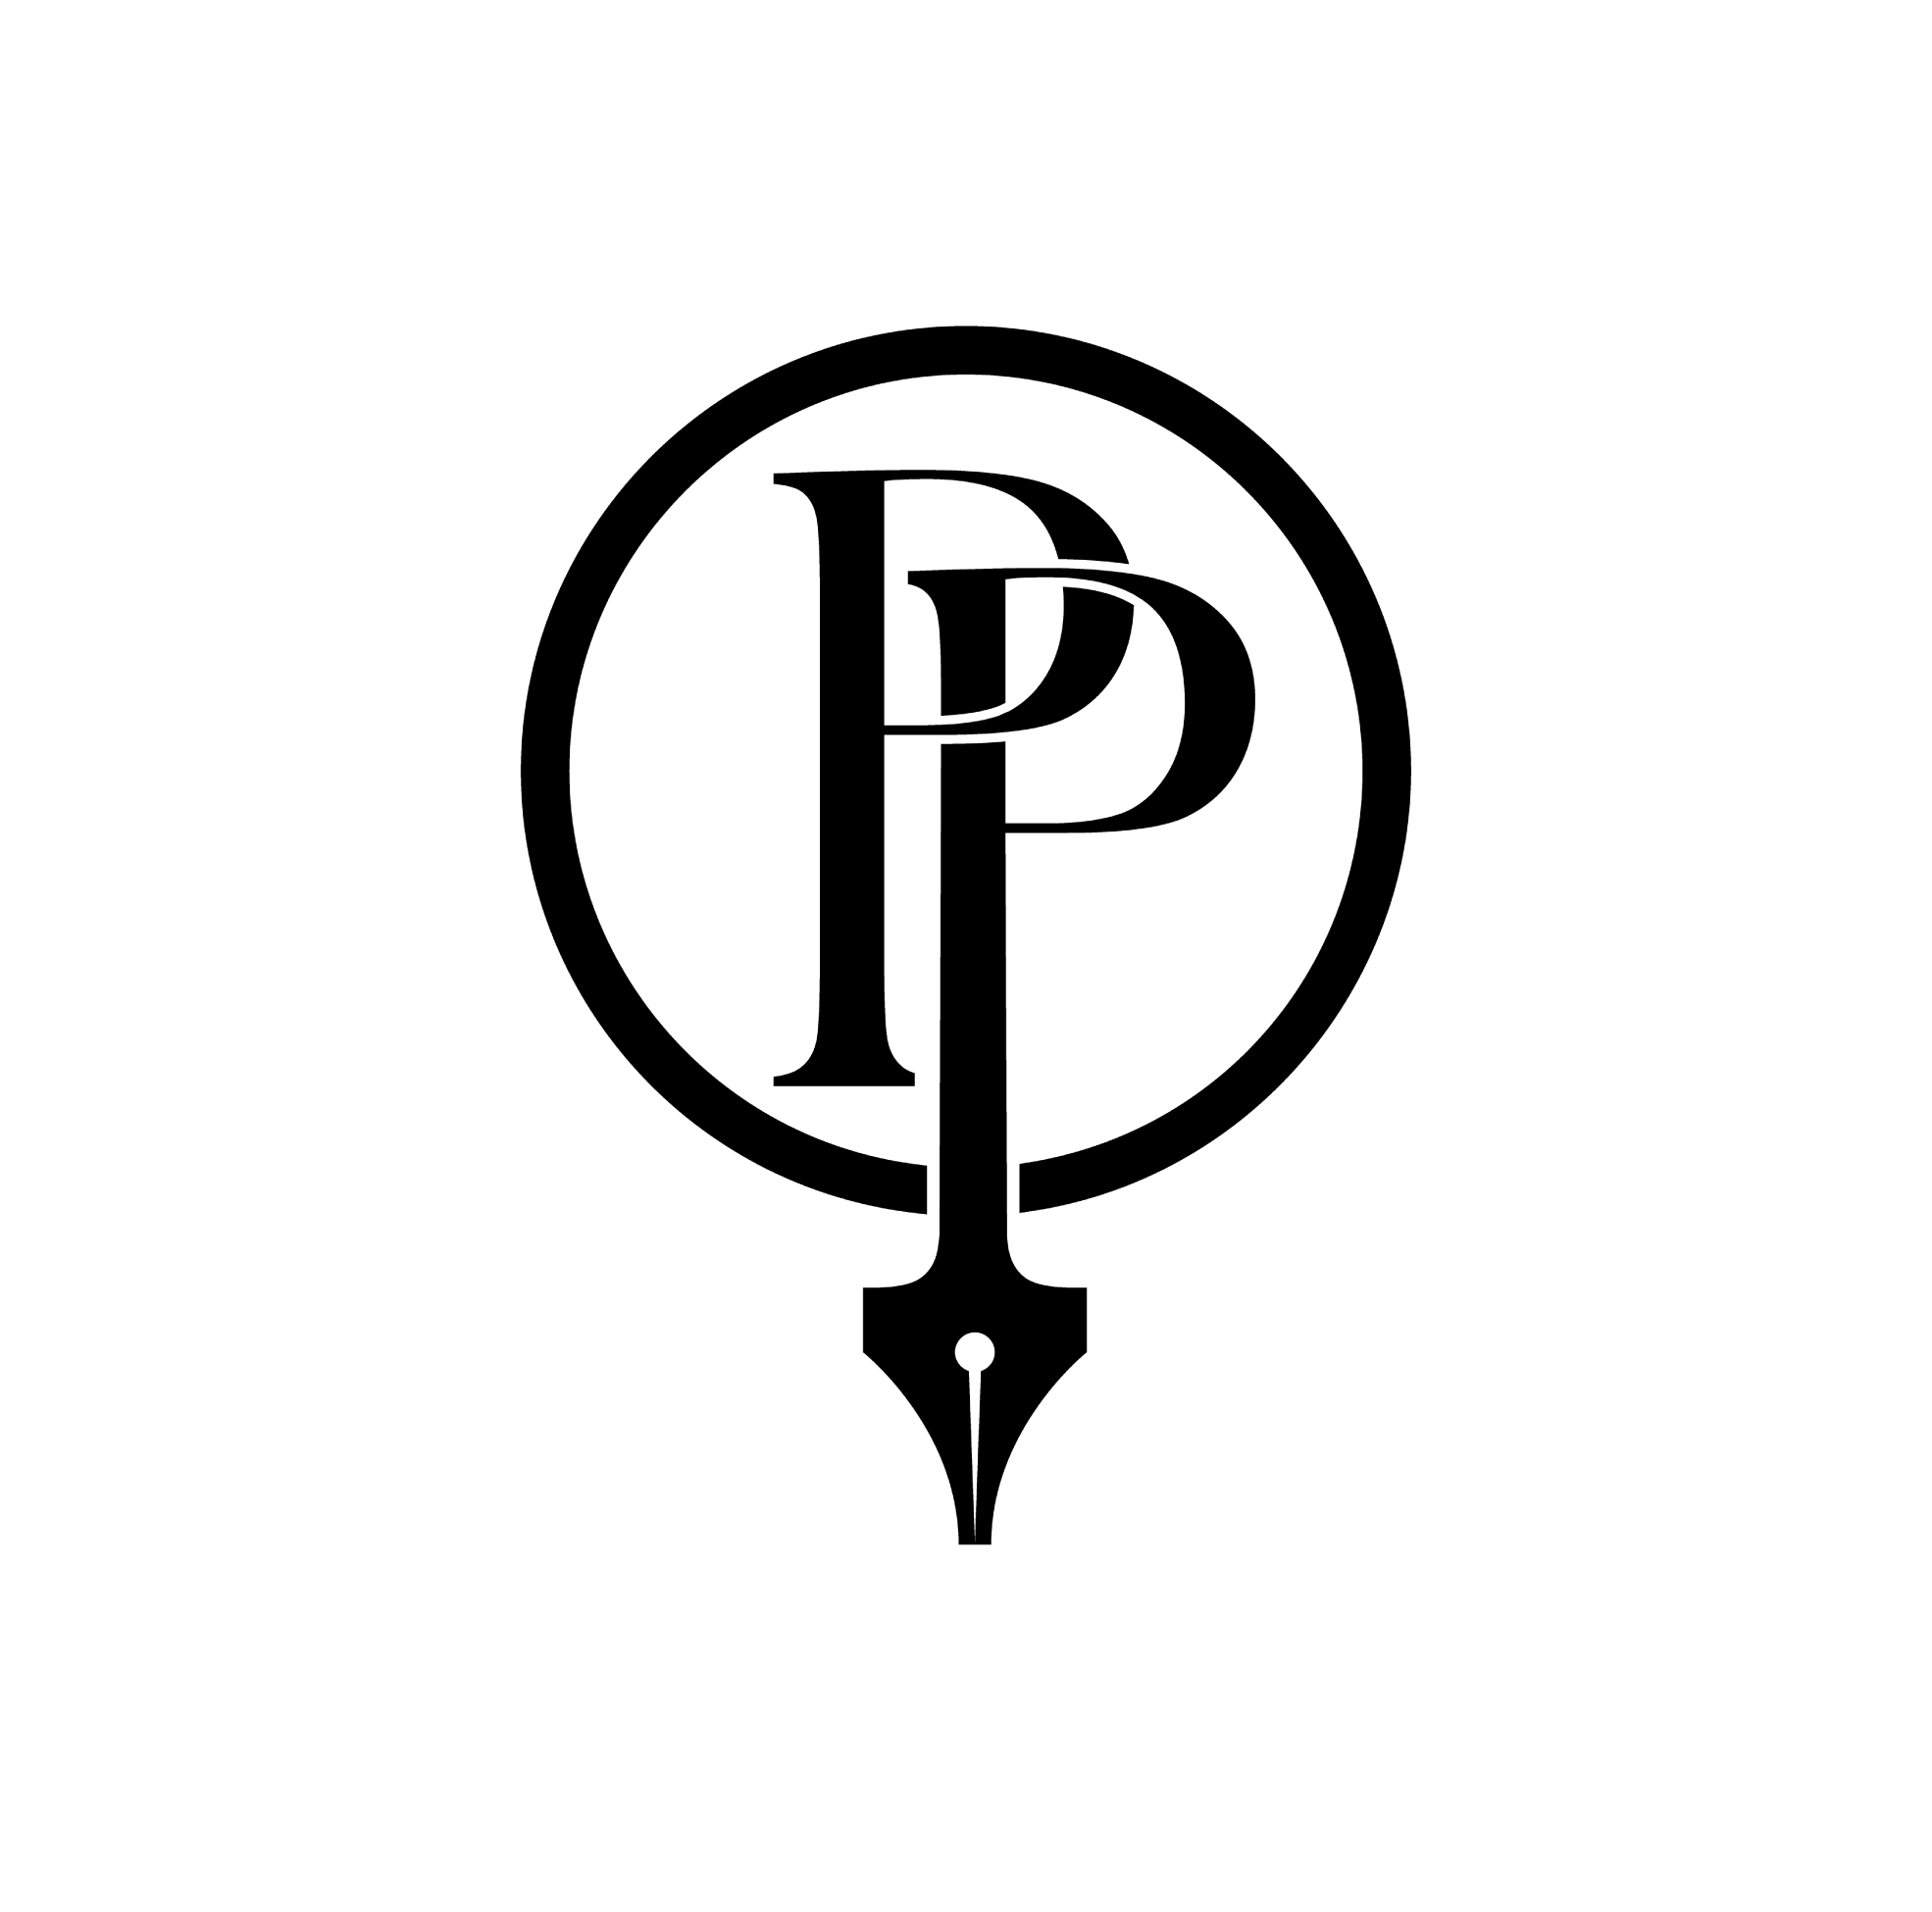 Preda-Popescu monogram